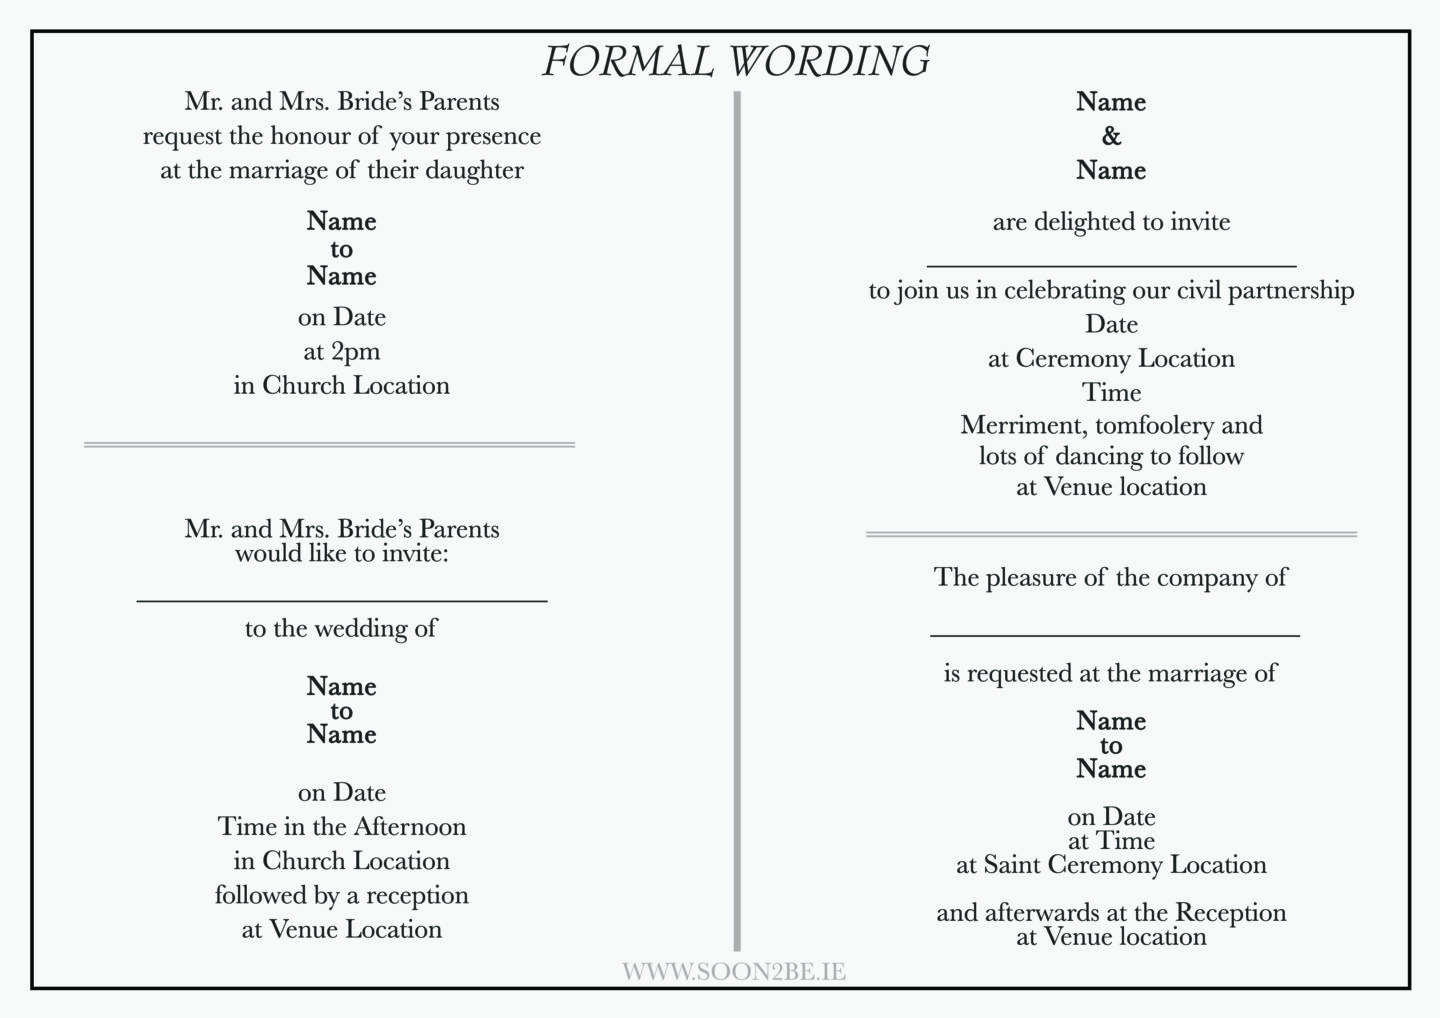 Formal wedding invitation wording